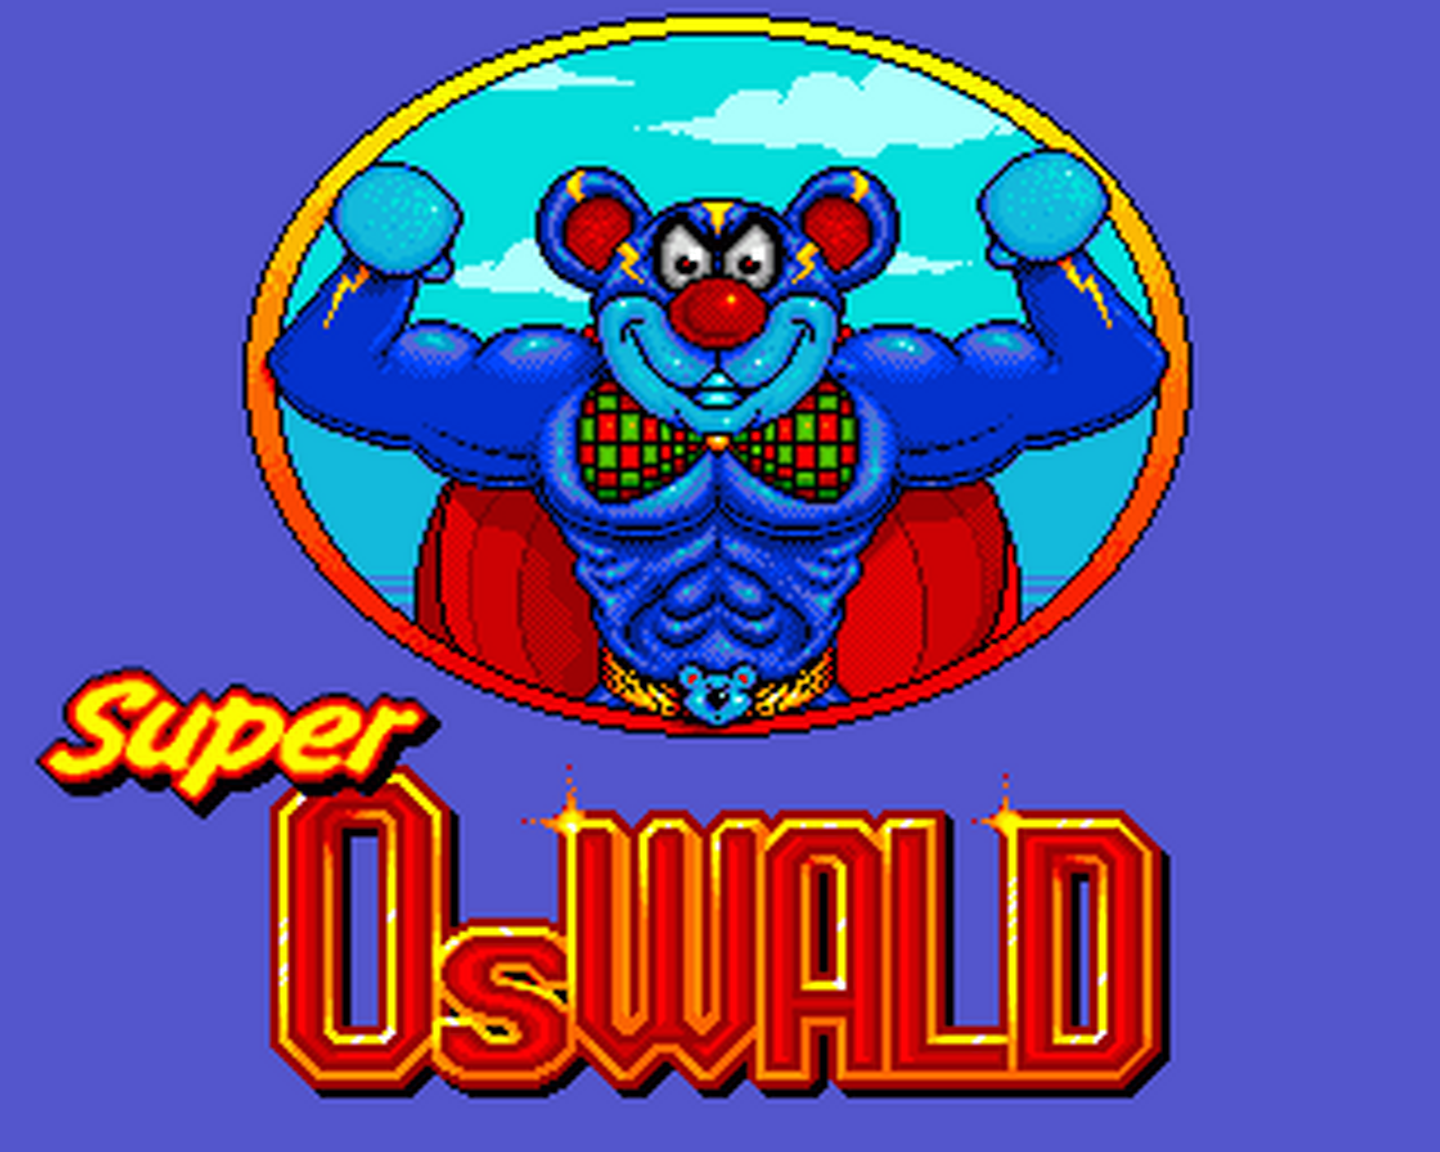 Amiga GameBase Super_OsWALD Silverrock 1990